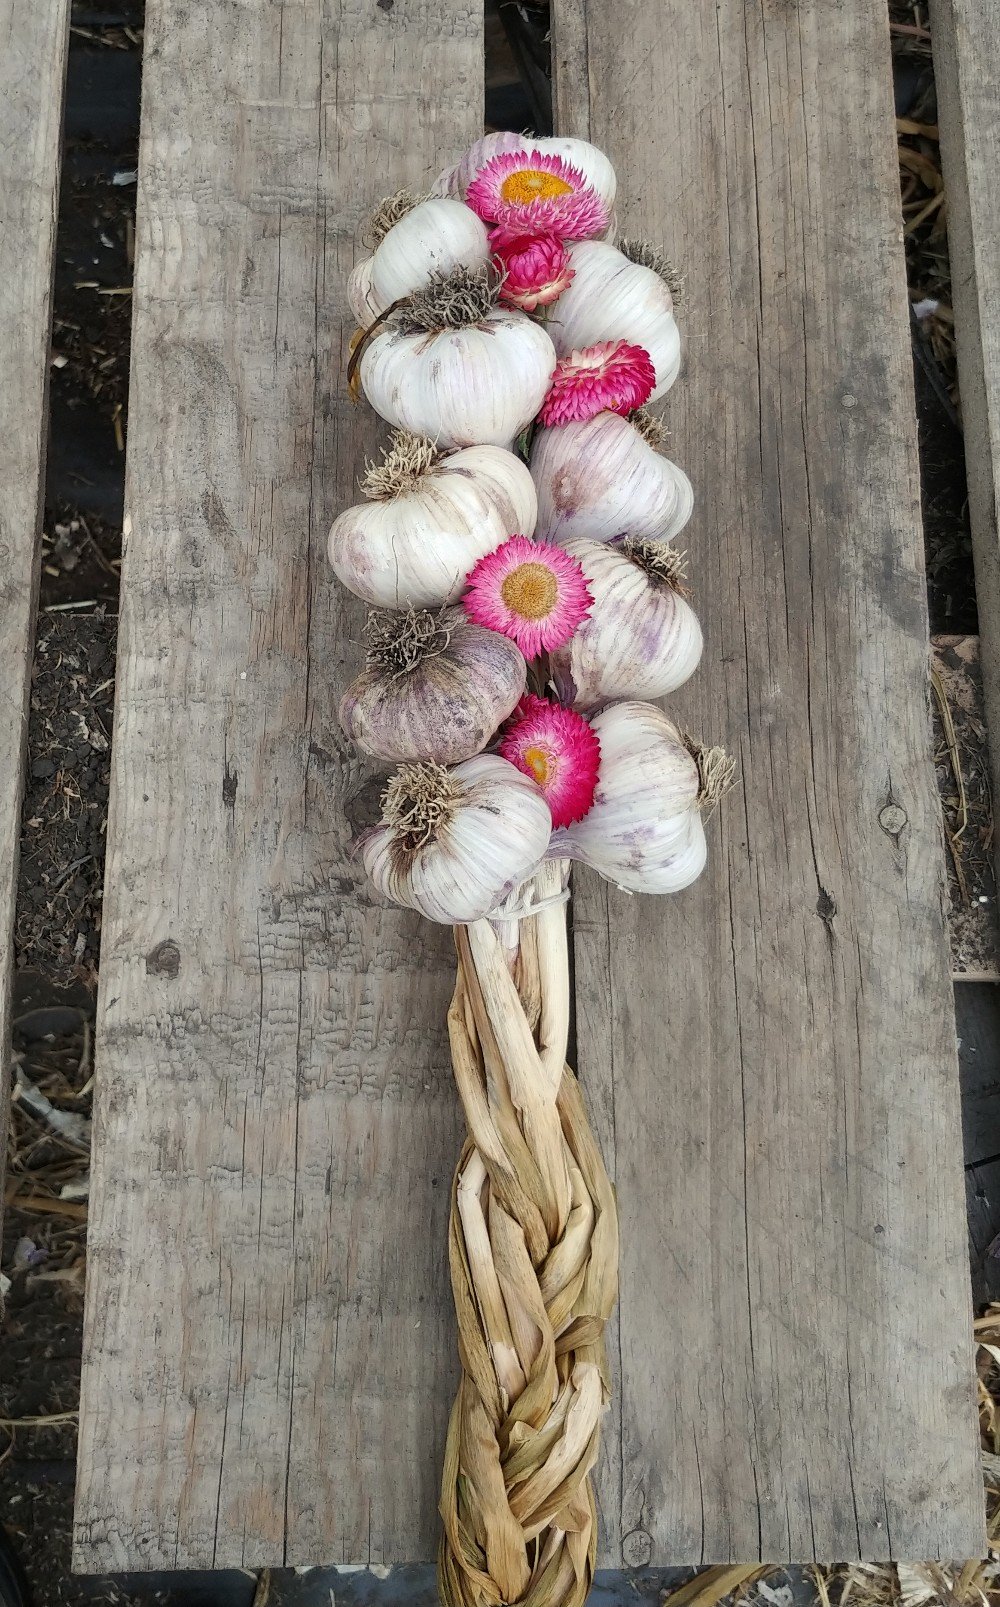 Previous Happening: Farm Happenings October 8 - Winter program, garlic and extras